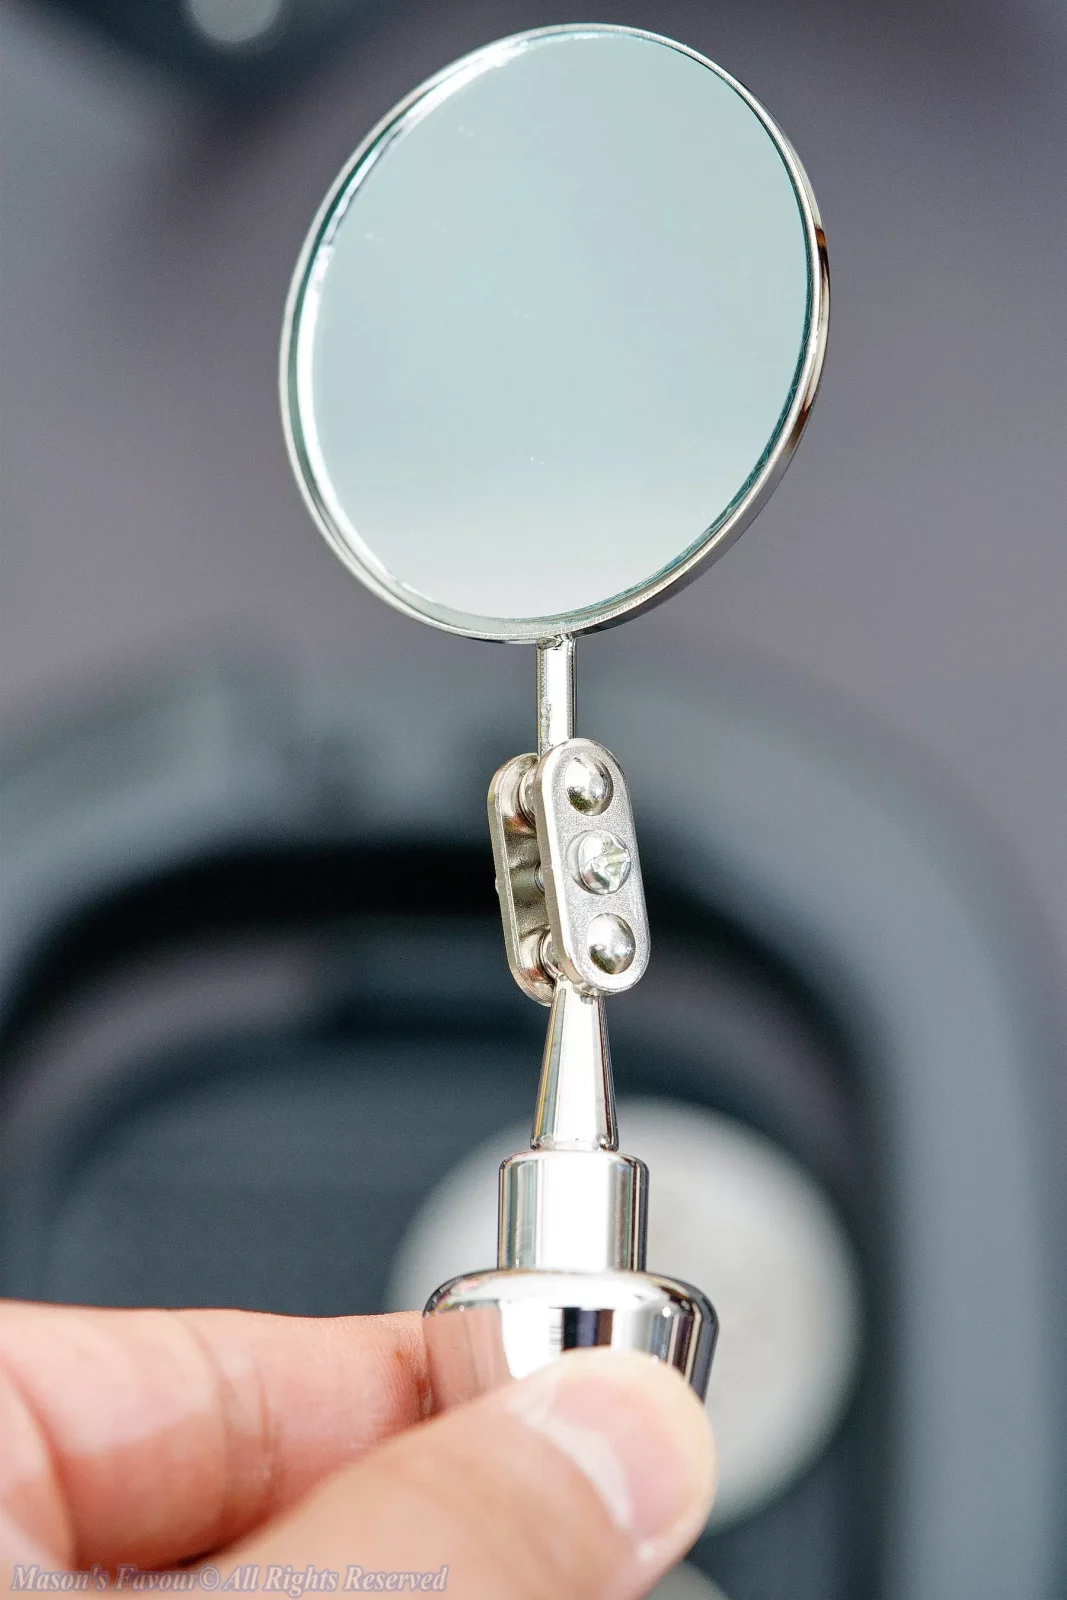 Flair 58 Espresso Maker - Detachable Mirror 1